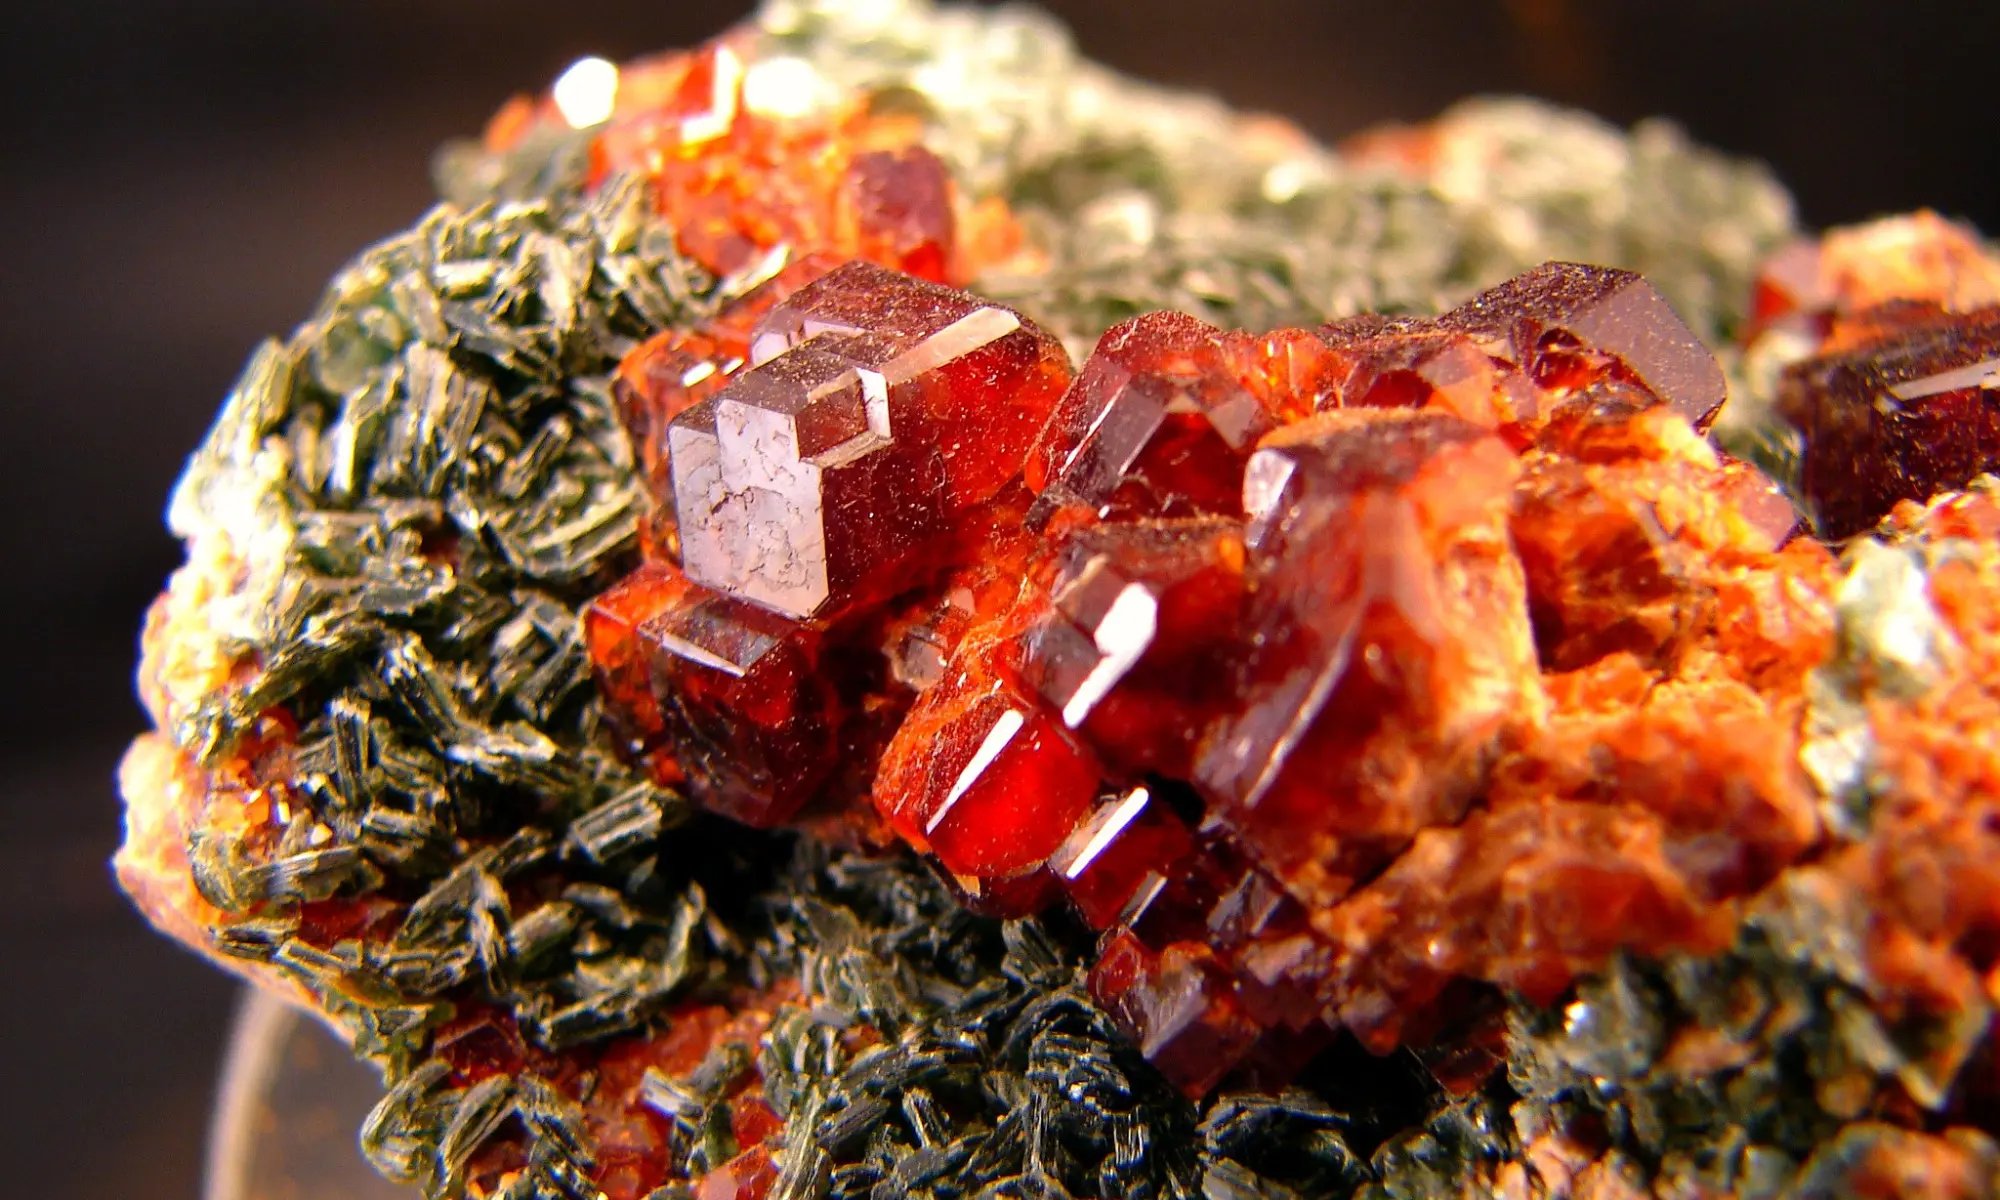 A vibrant red grossular garnet crystal within a matrix,